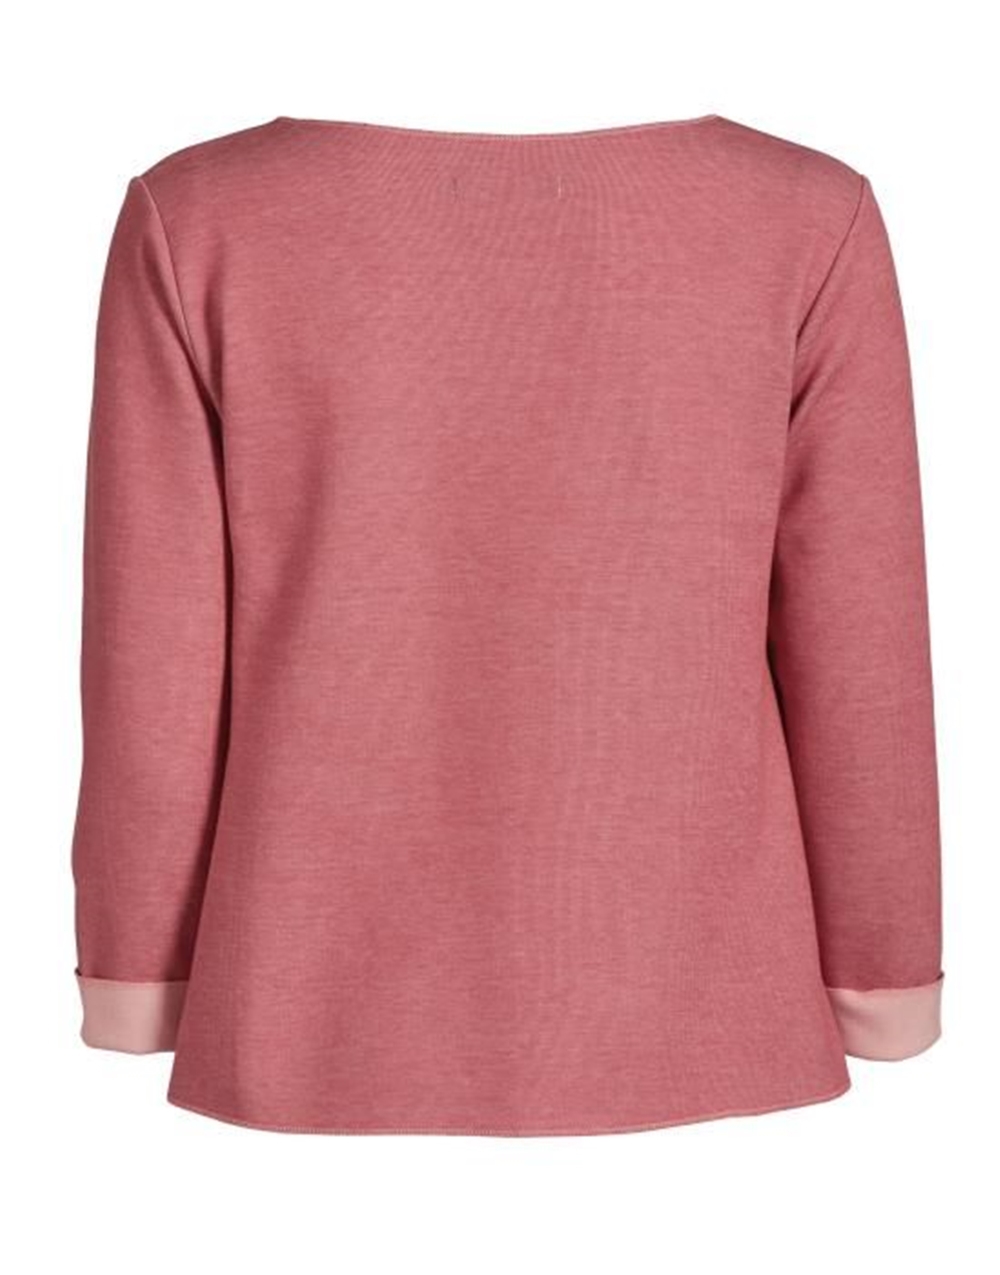 Essenza Home Cosa Uni Sweater 3/4 Sleeve Dusty Marsala in XS